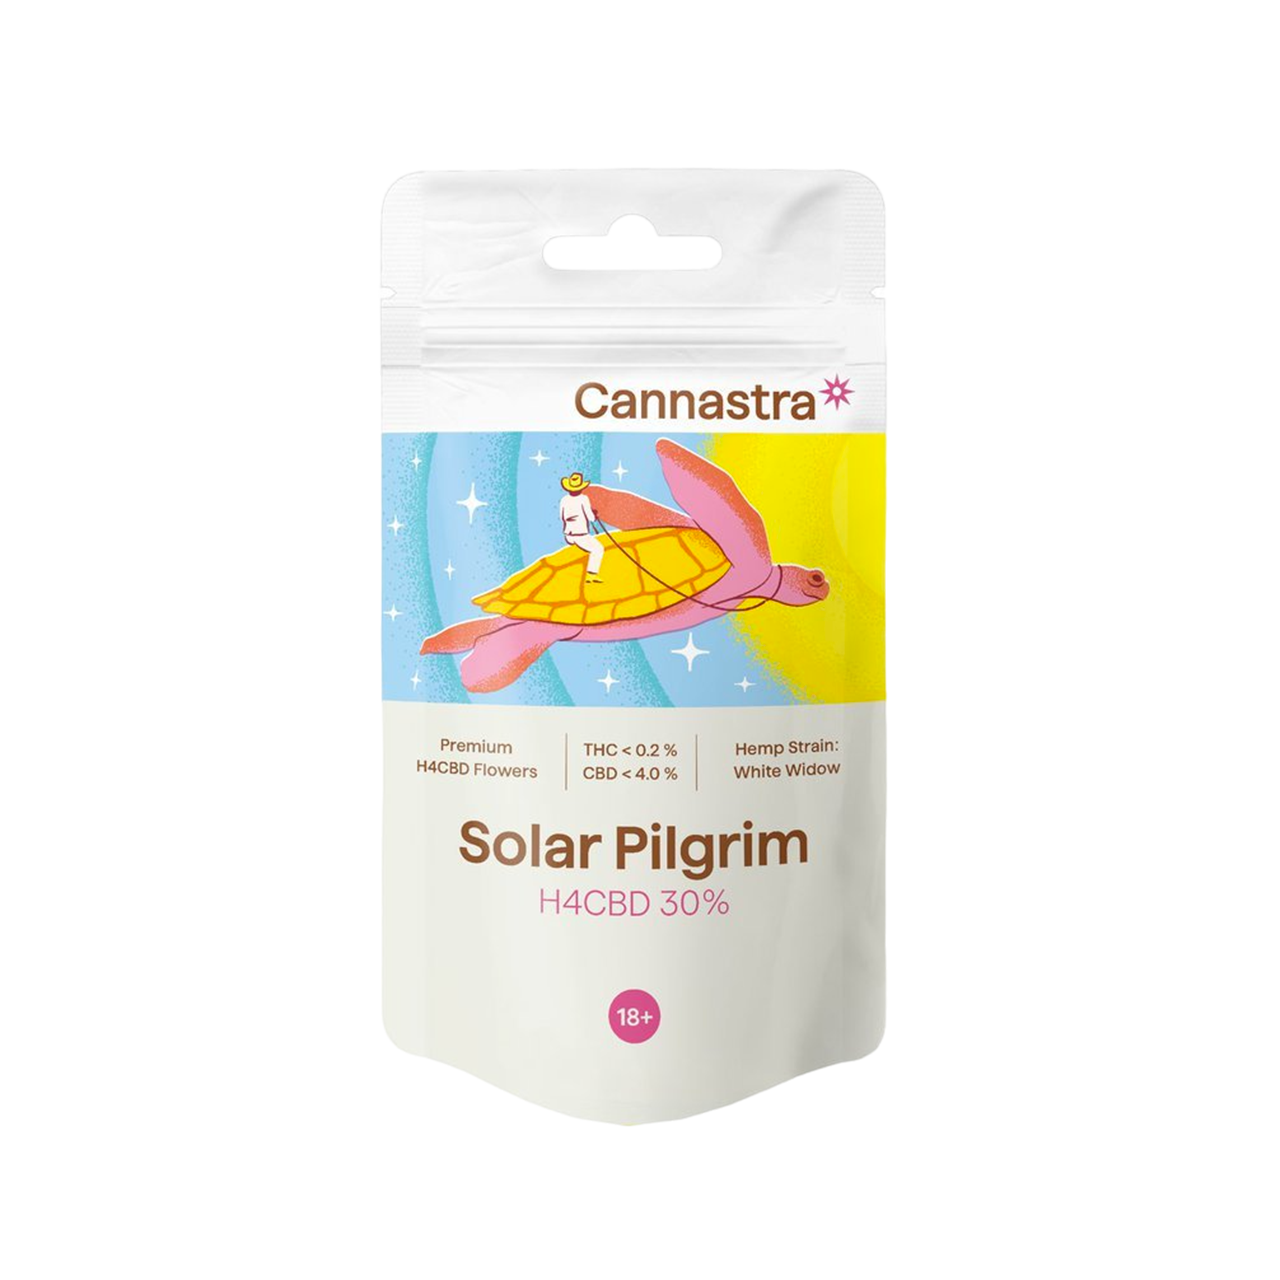 Cannastra Solar Pilgrim White Widow H4CBD - 5g